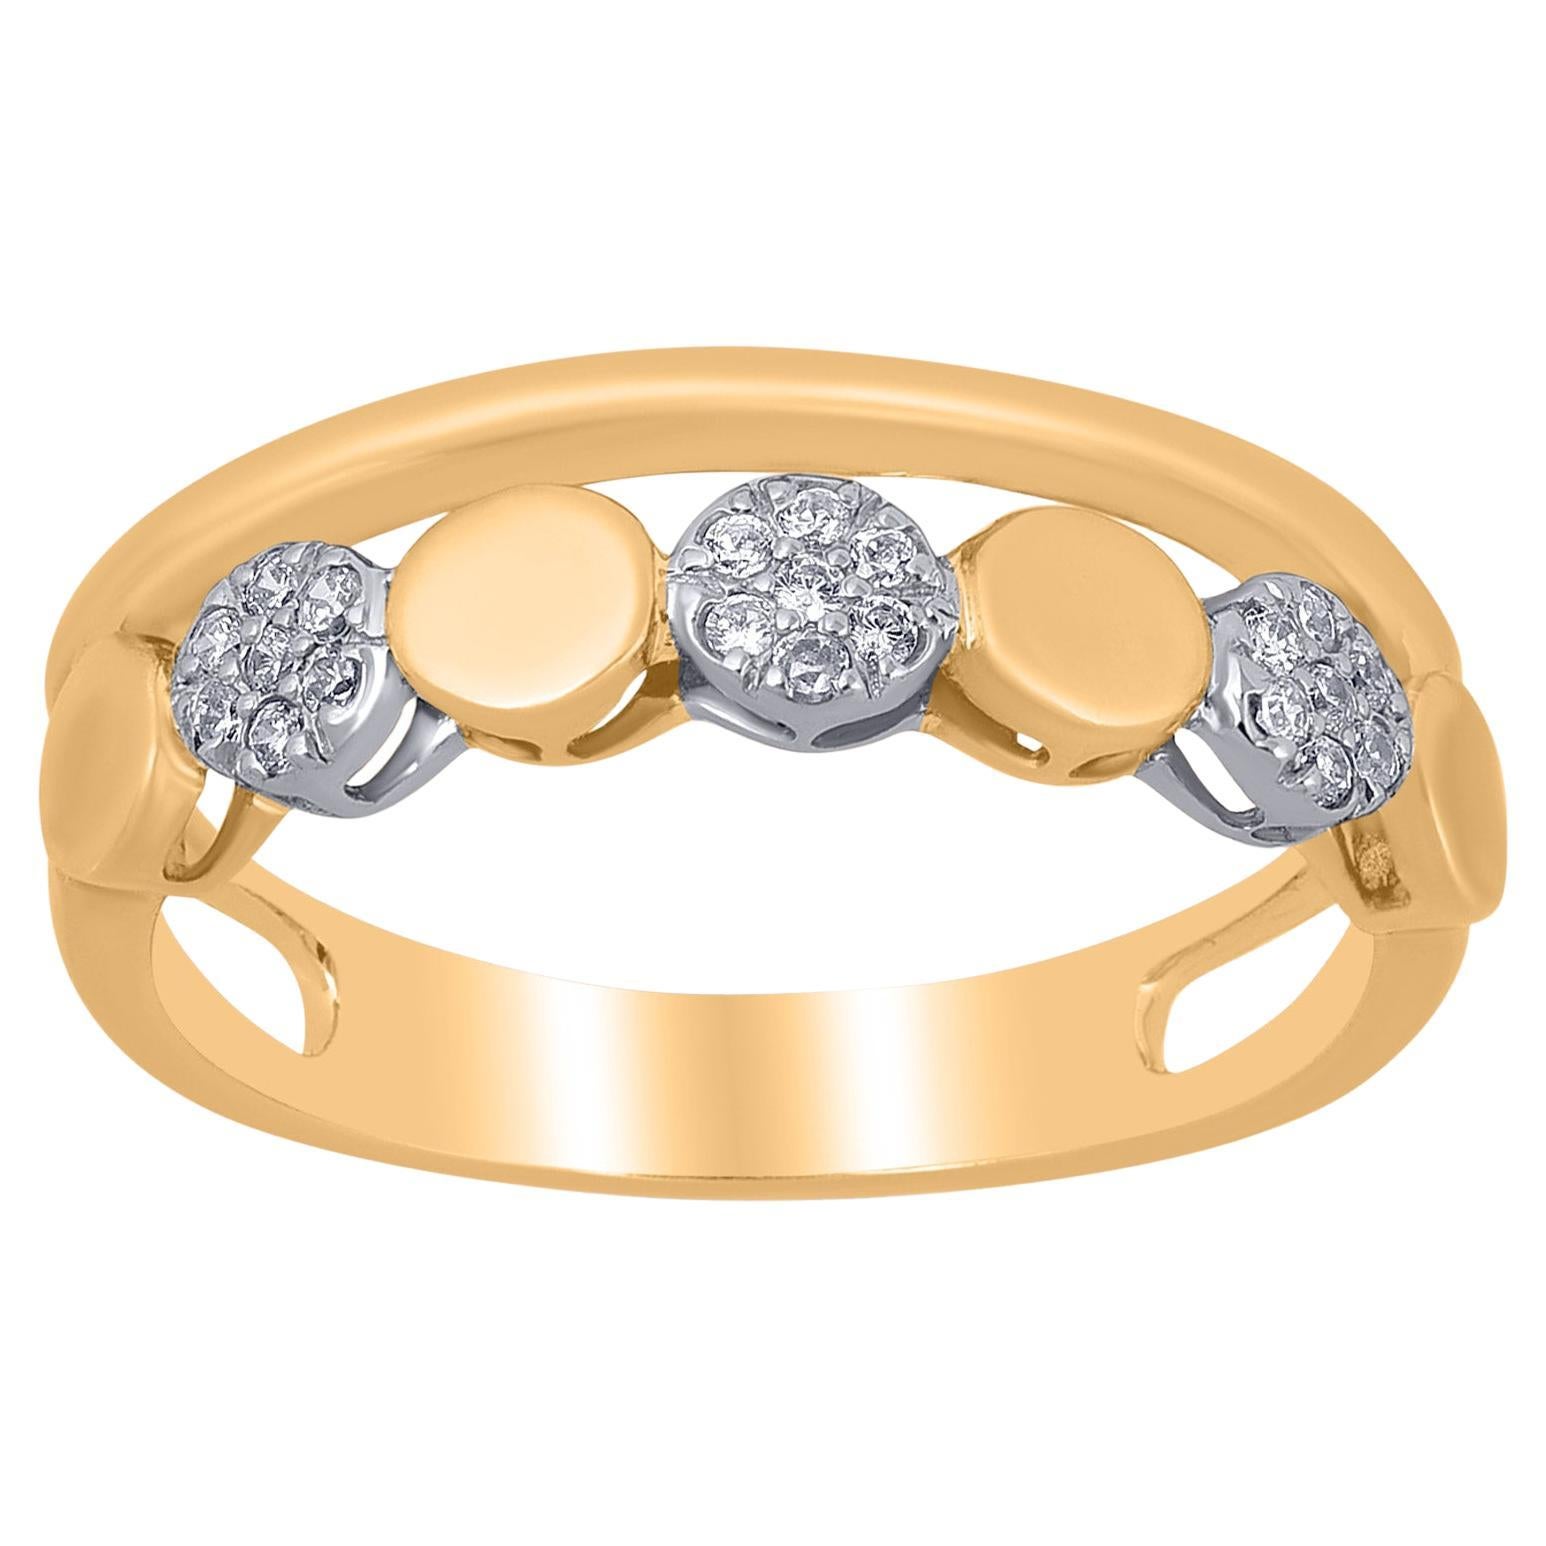 TJD 0.15 Carat Brilliant Cut Diamond 14KT Yellow Gold Wedding Fashion Band Ring